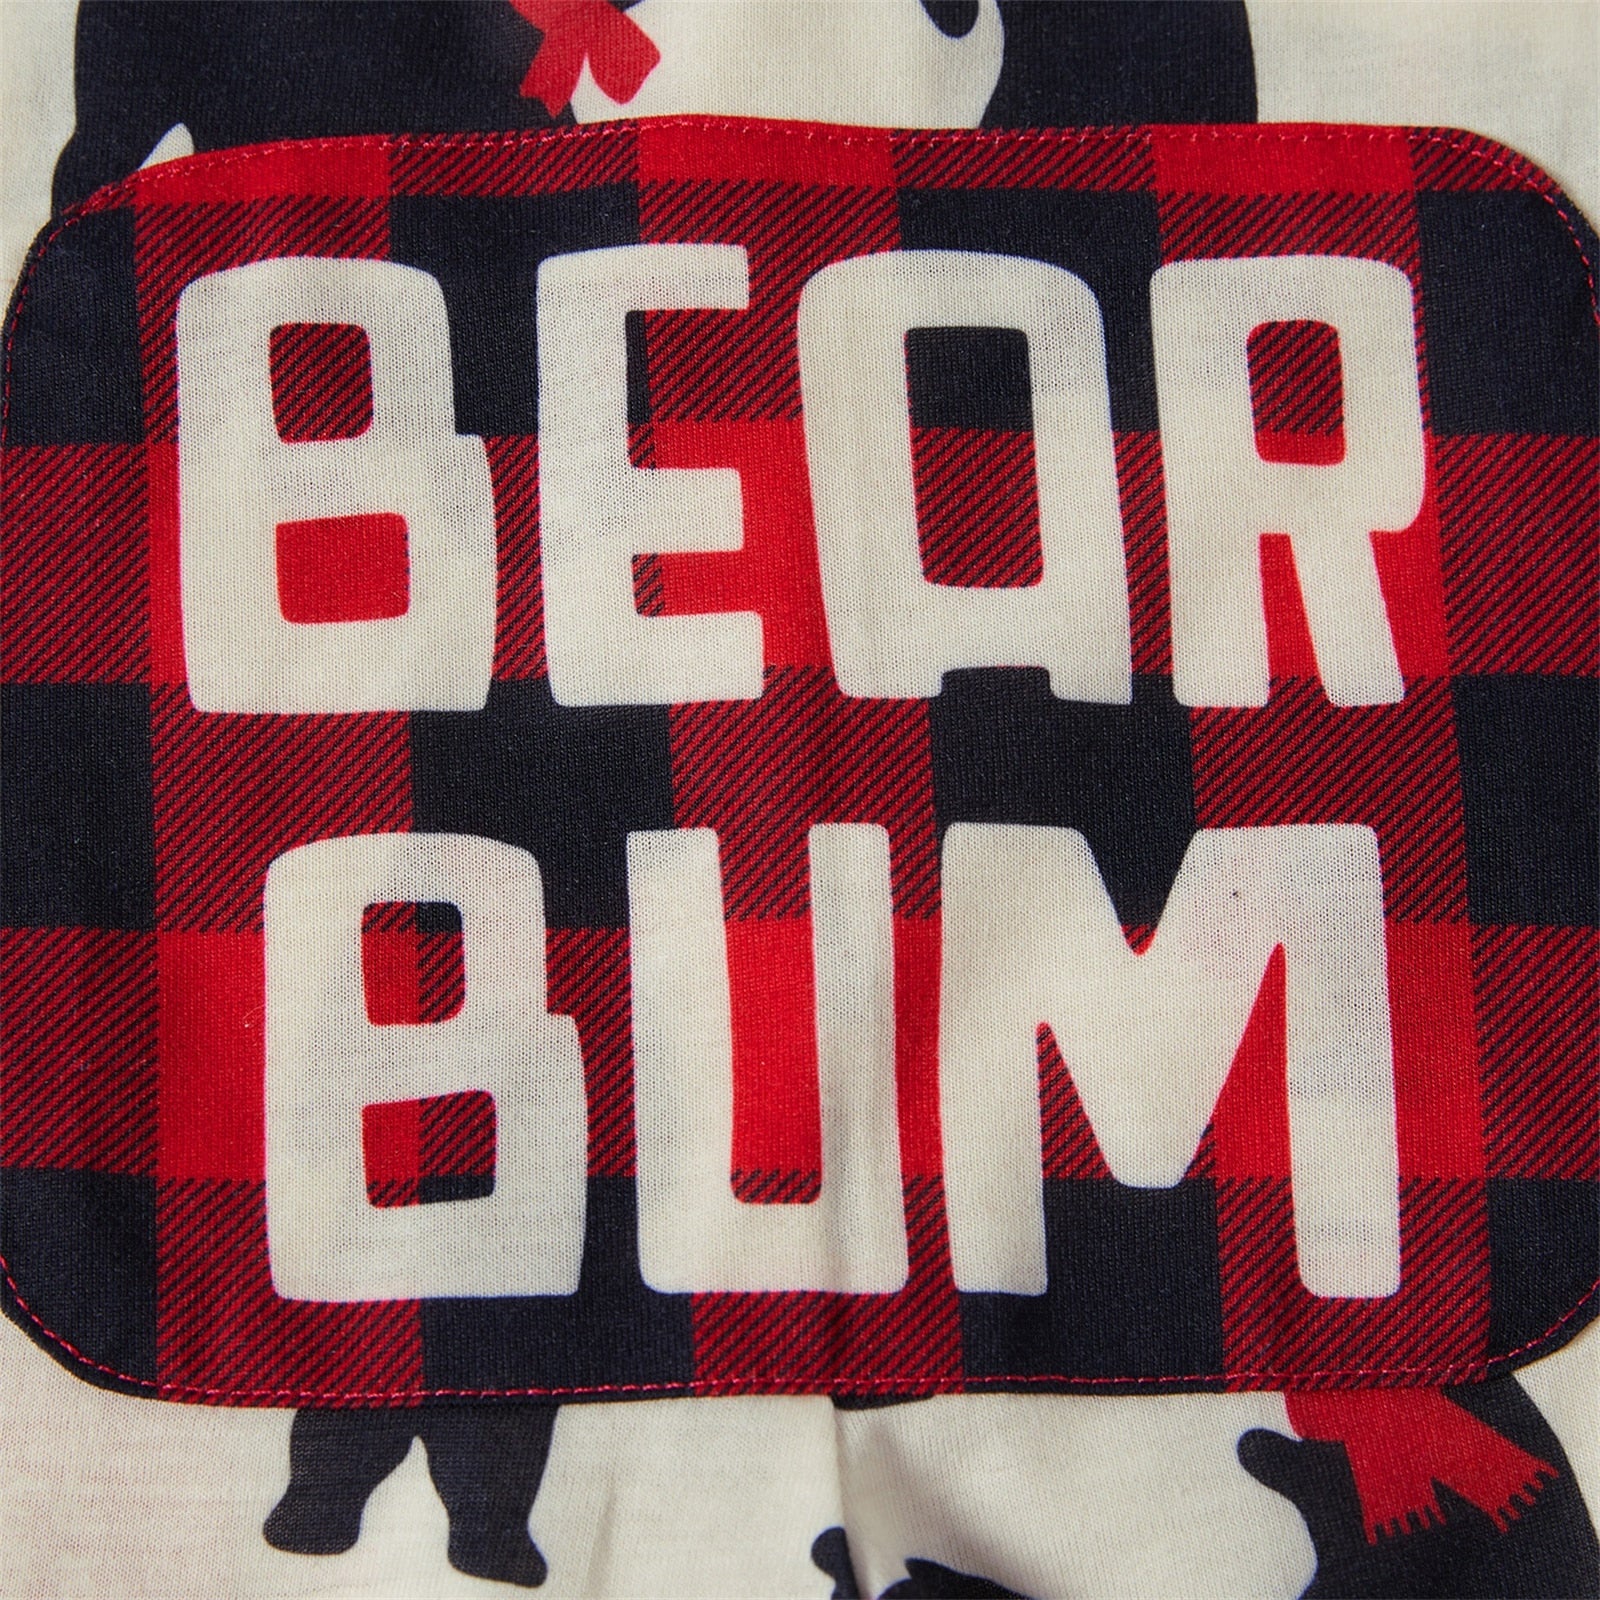 Family Matching Christmas Bear Print  Long-sleeve Pajamas Sleepwear